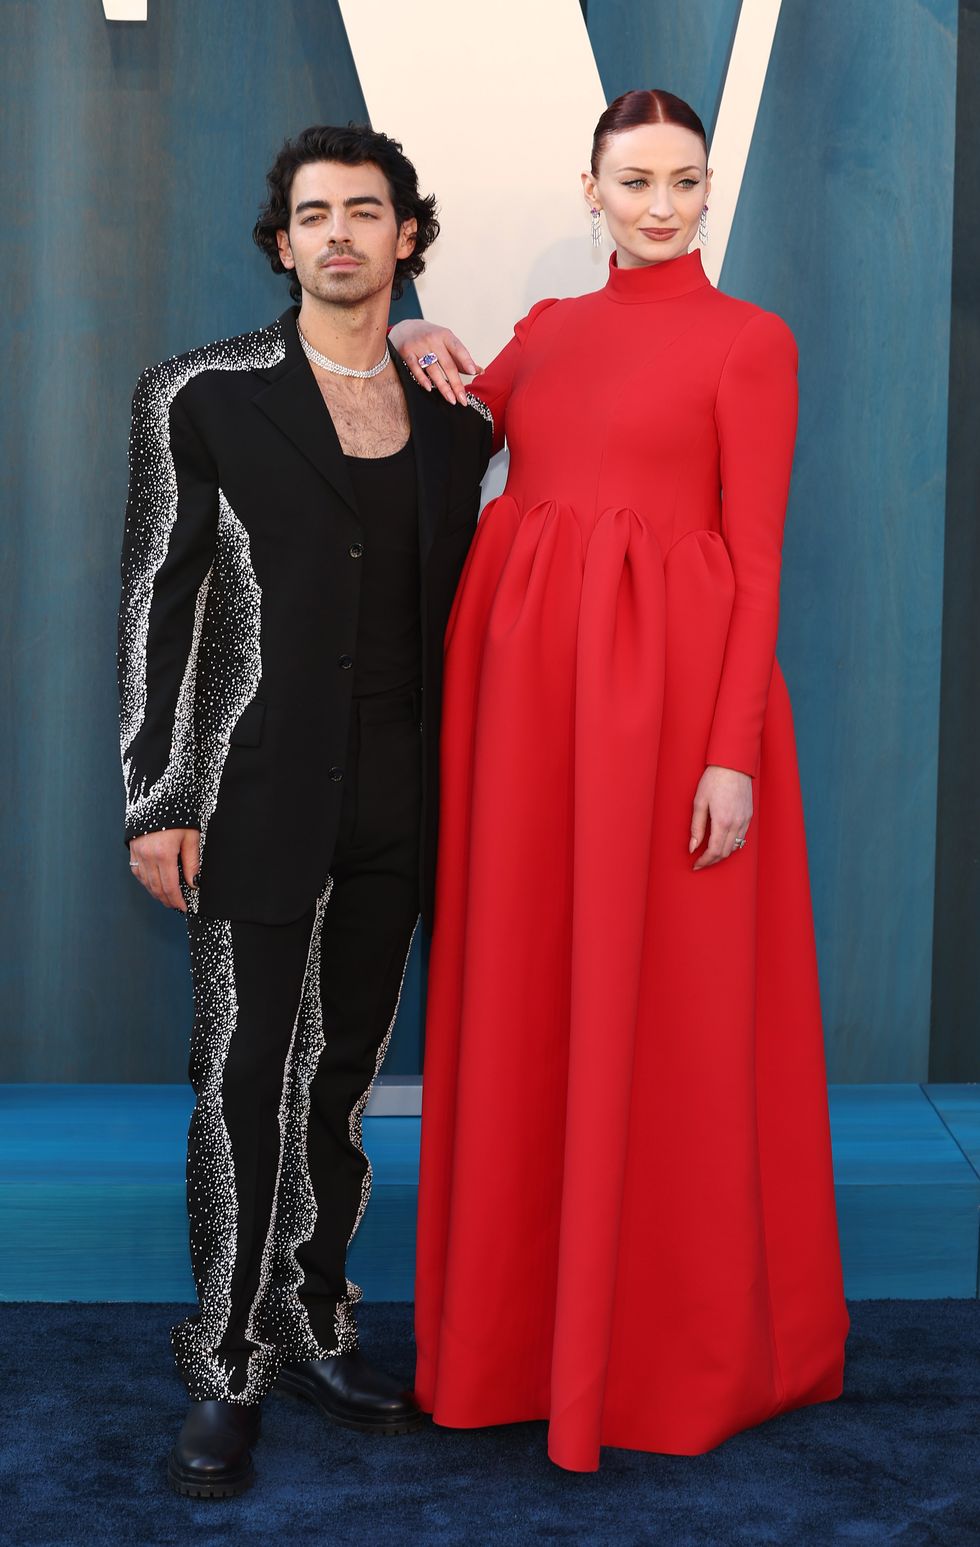 Sophie Turner Sparkles in Sheer Dress at Vanity Fair Oscars Party